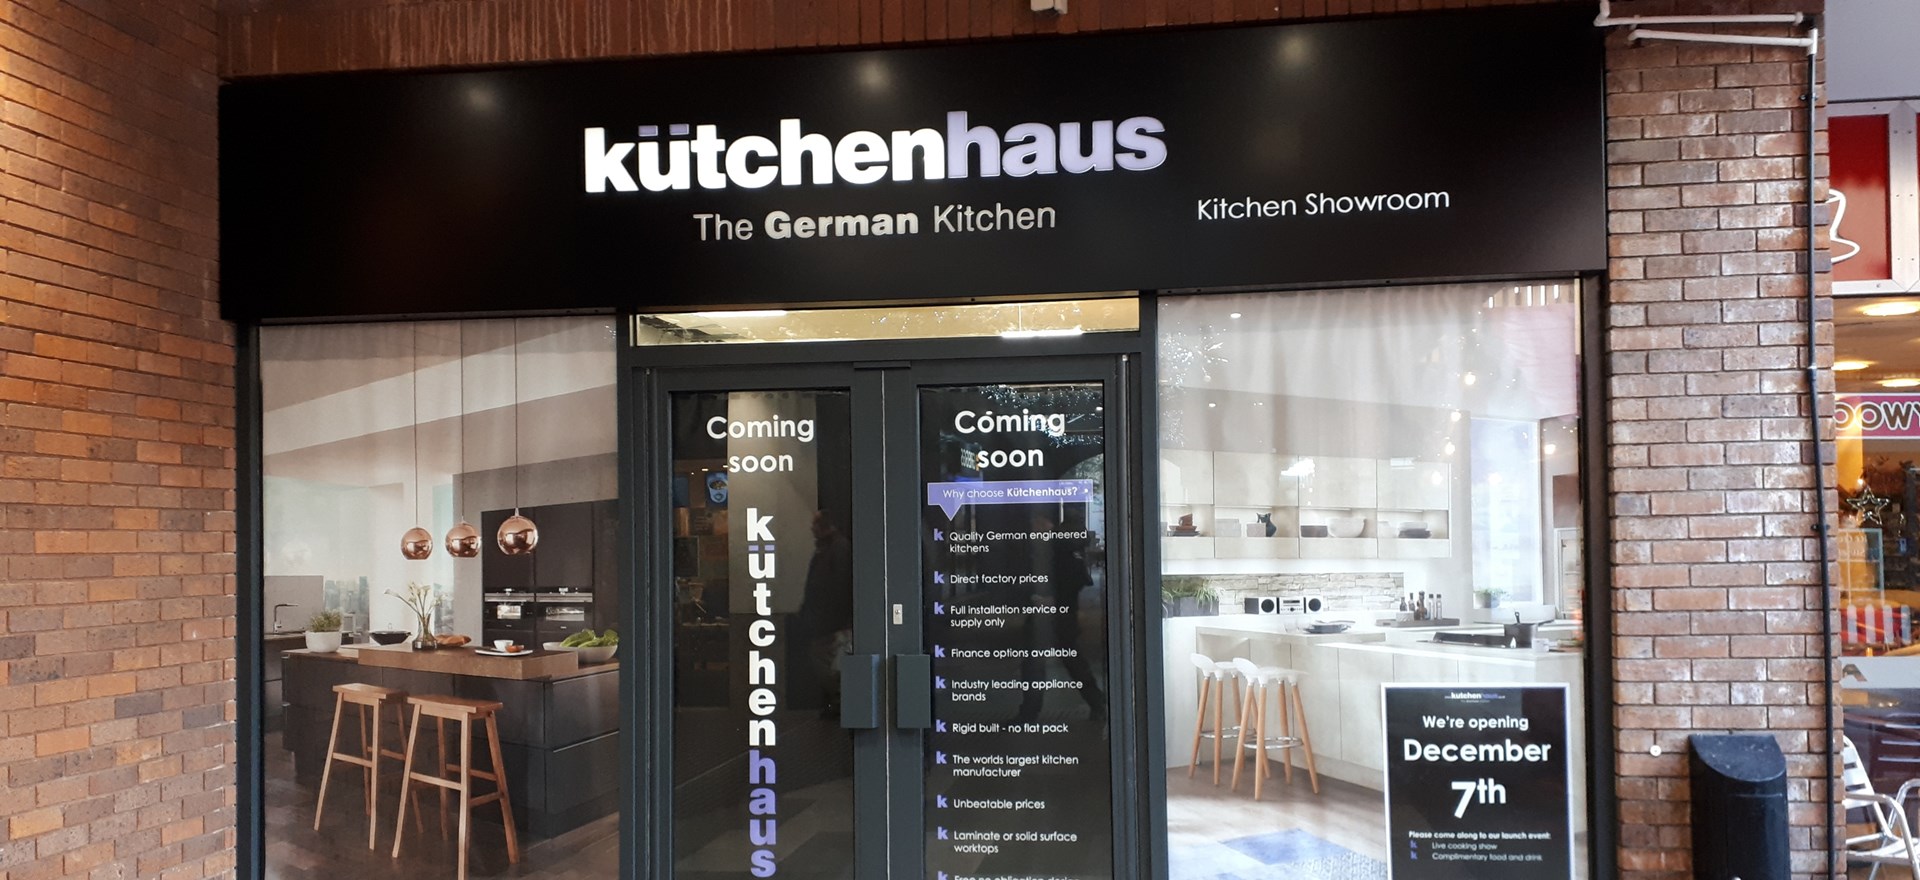 Kutchenhaus shop sign Signs Express Sheffield and Rotherham